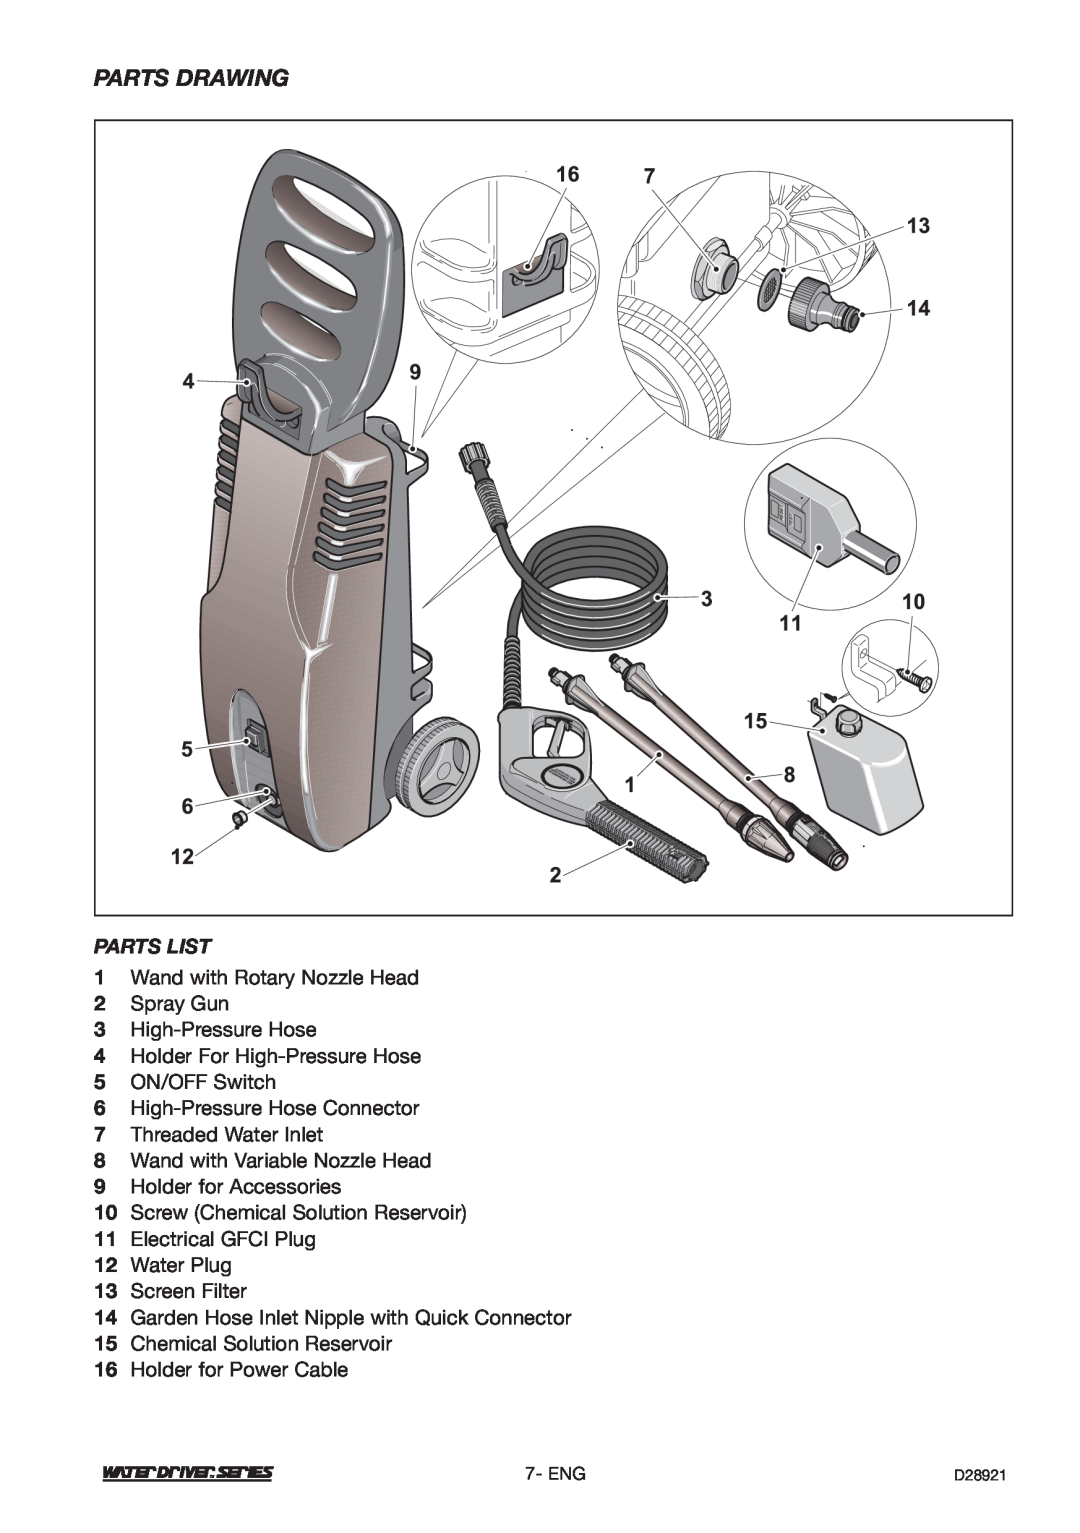 DeVillbiss Air Power Company D28921, WD1600E operation manual Parts Drawing, Parts List 